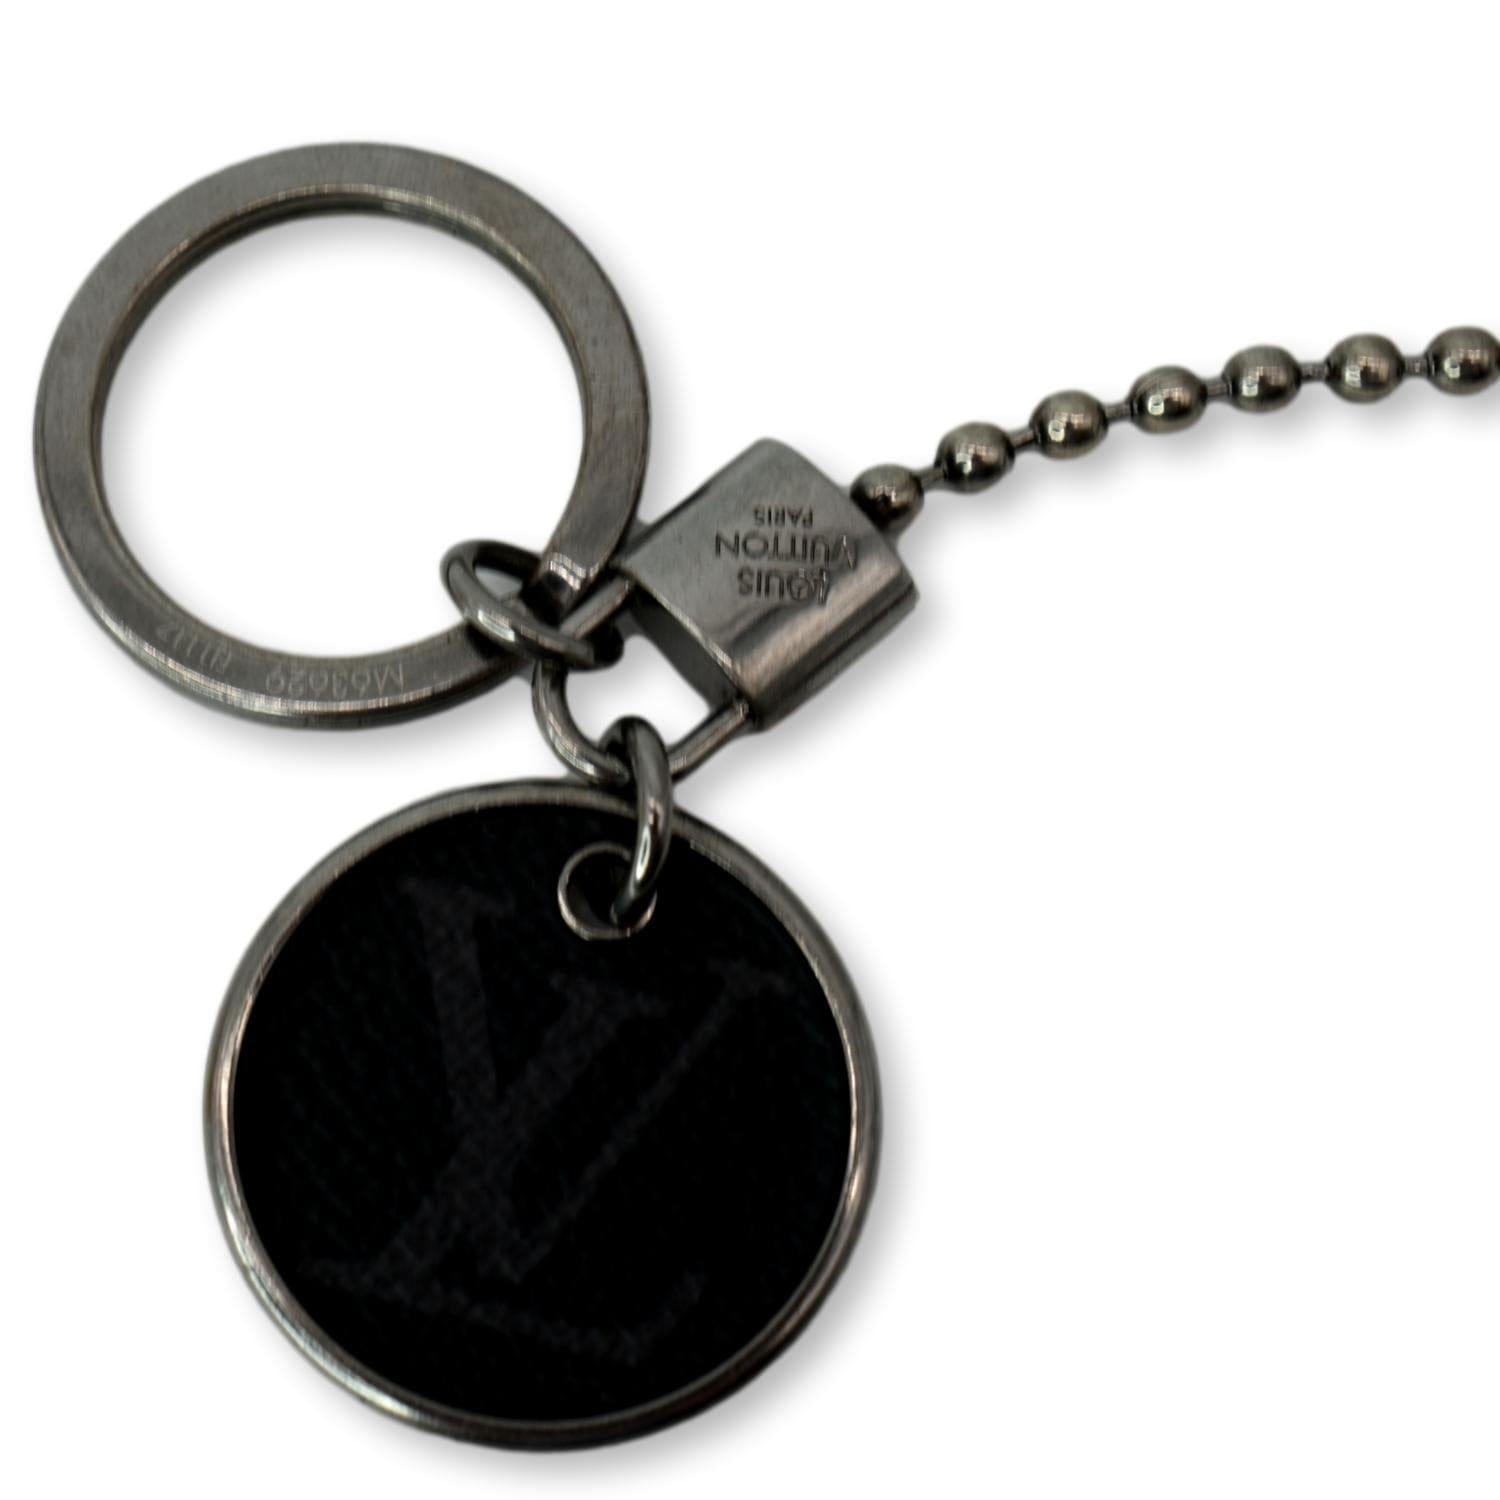 Key Pouch Monogram - Keychain Wallet, ID Cardholder